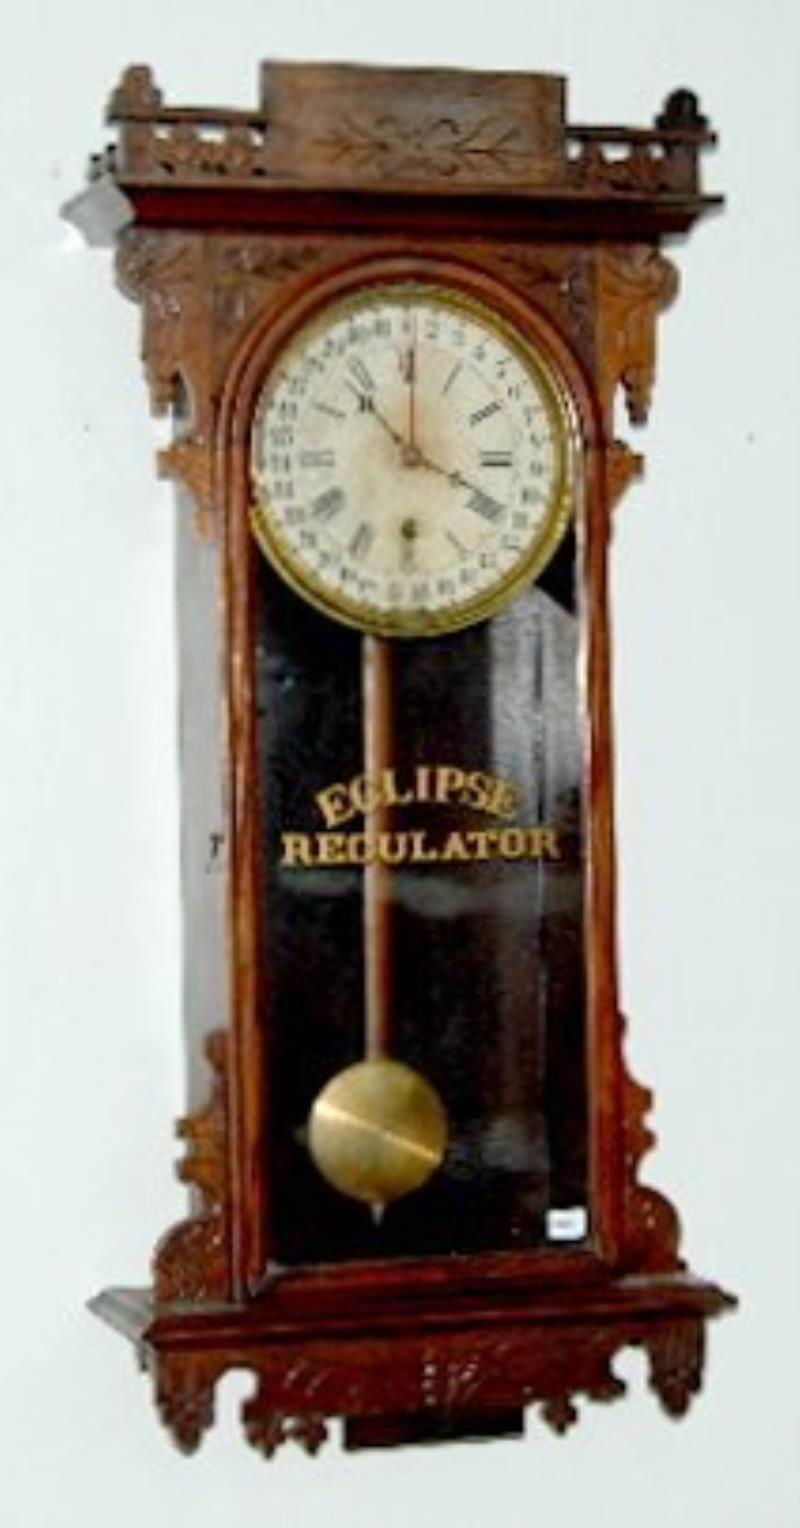 En Welch Regulator Calendar No 1 Wall Clock Price Guide